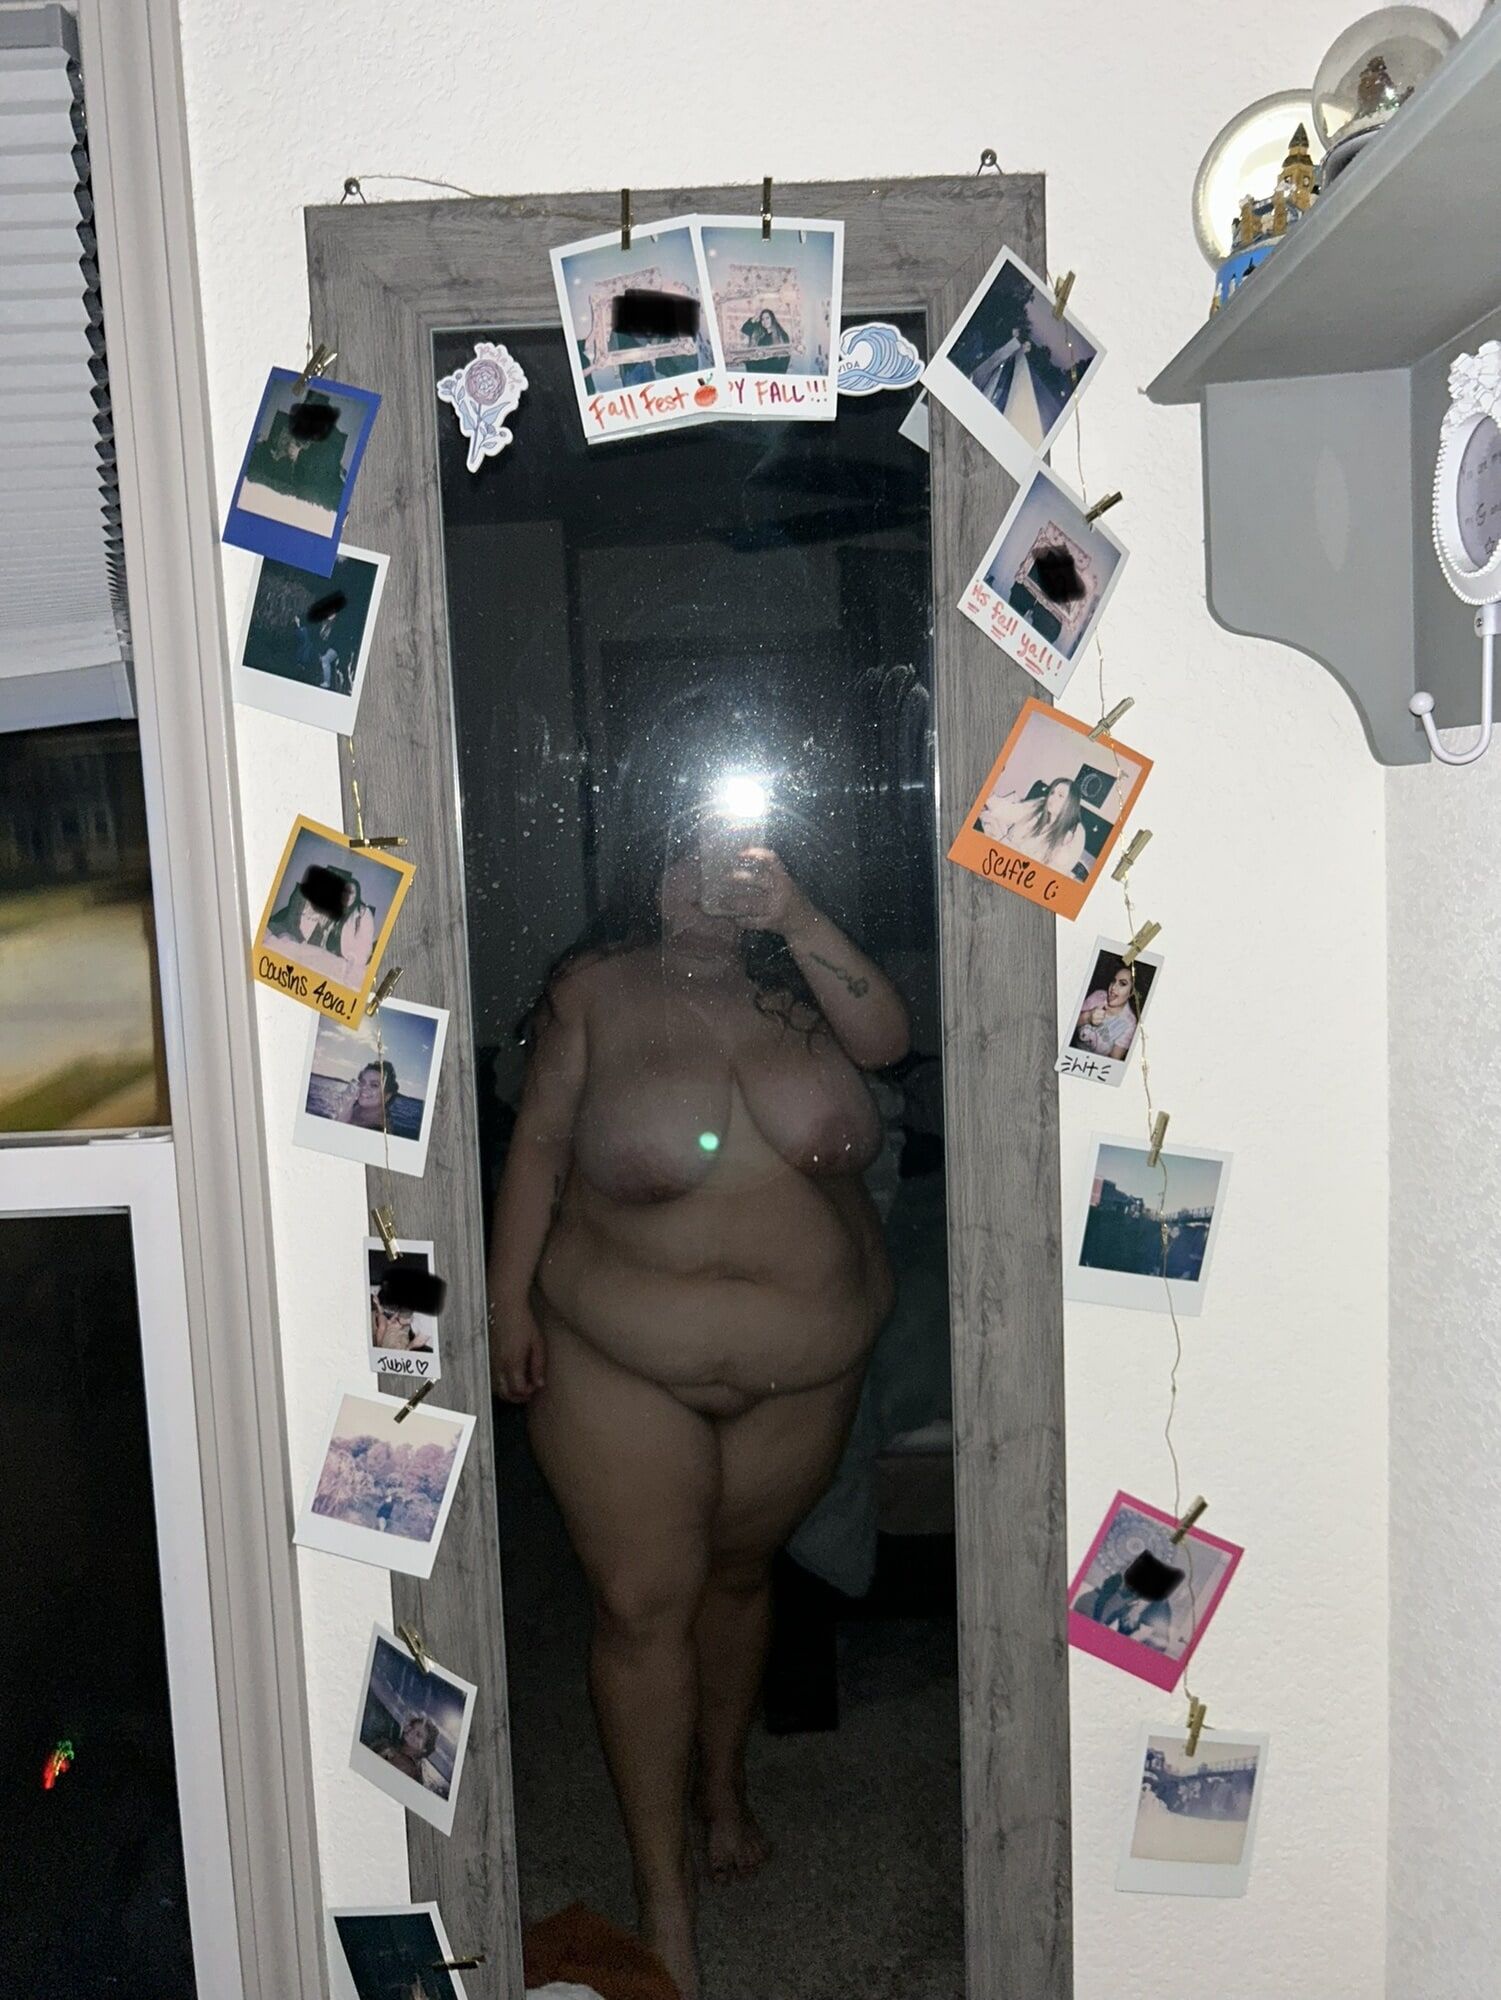 Nude selfie